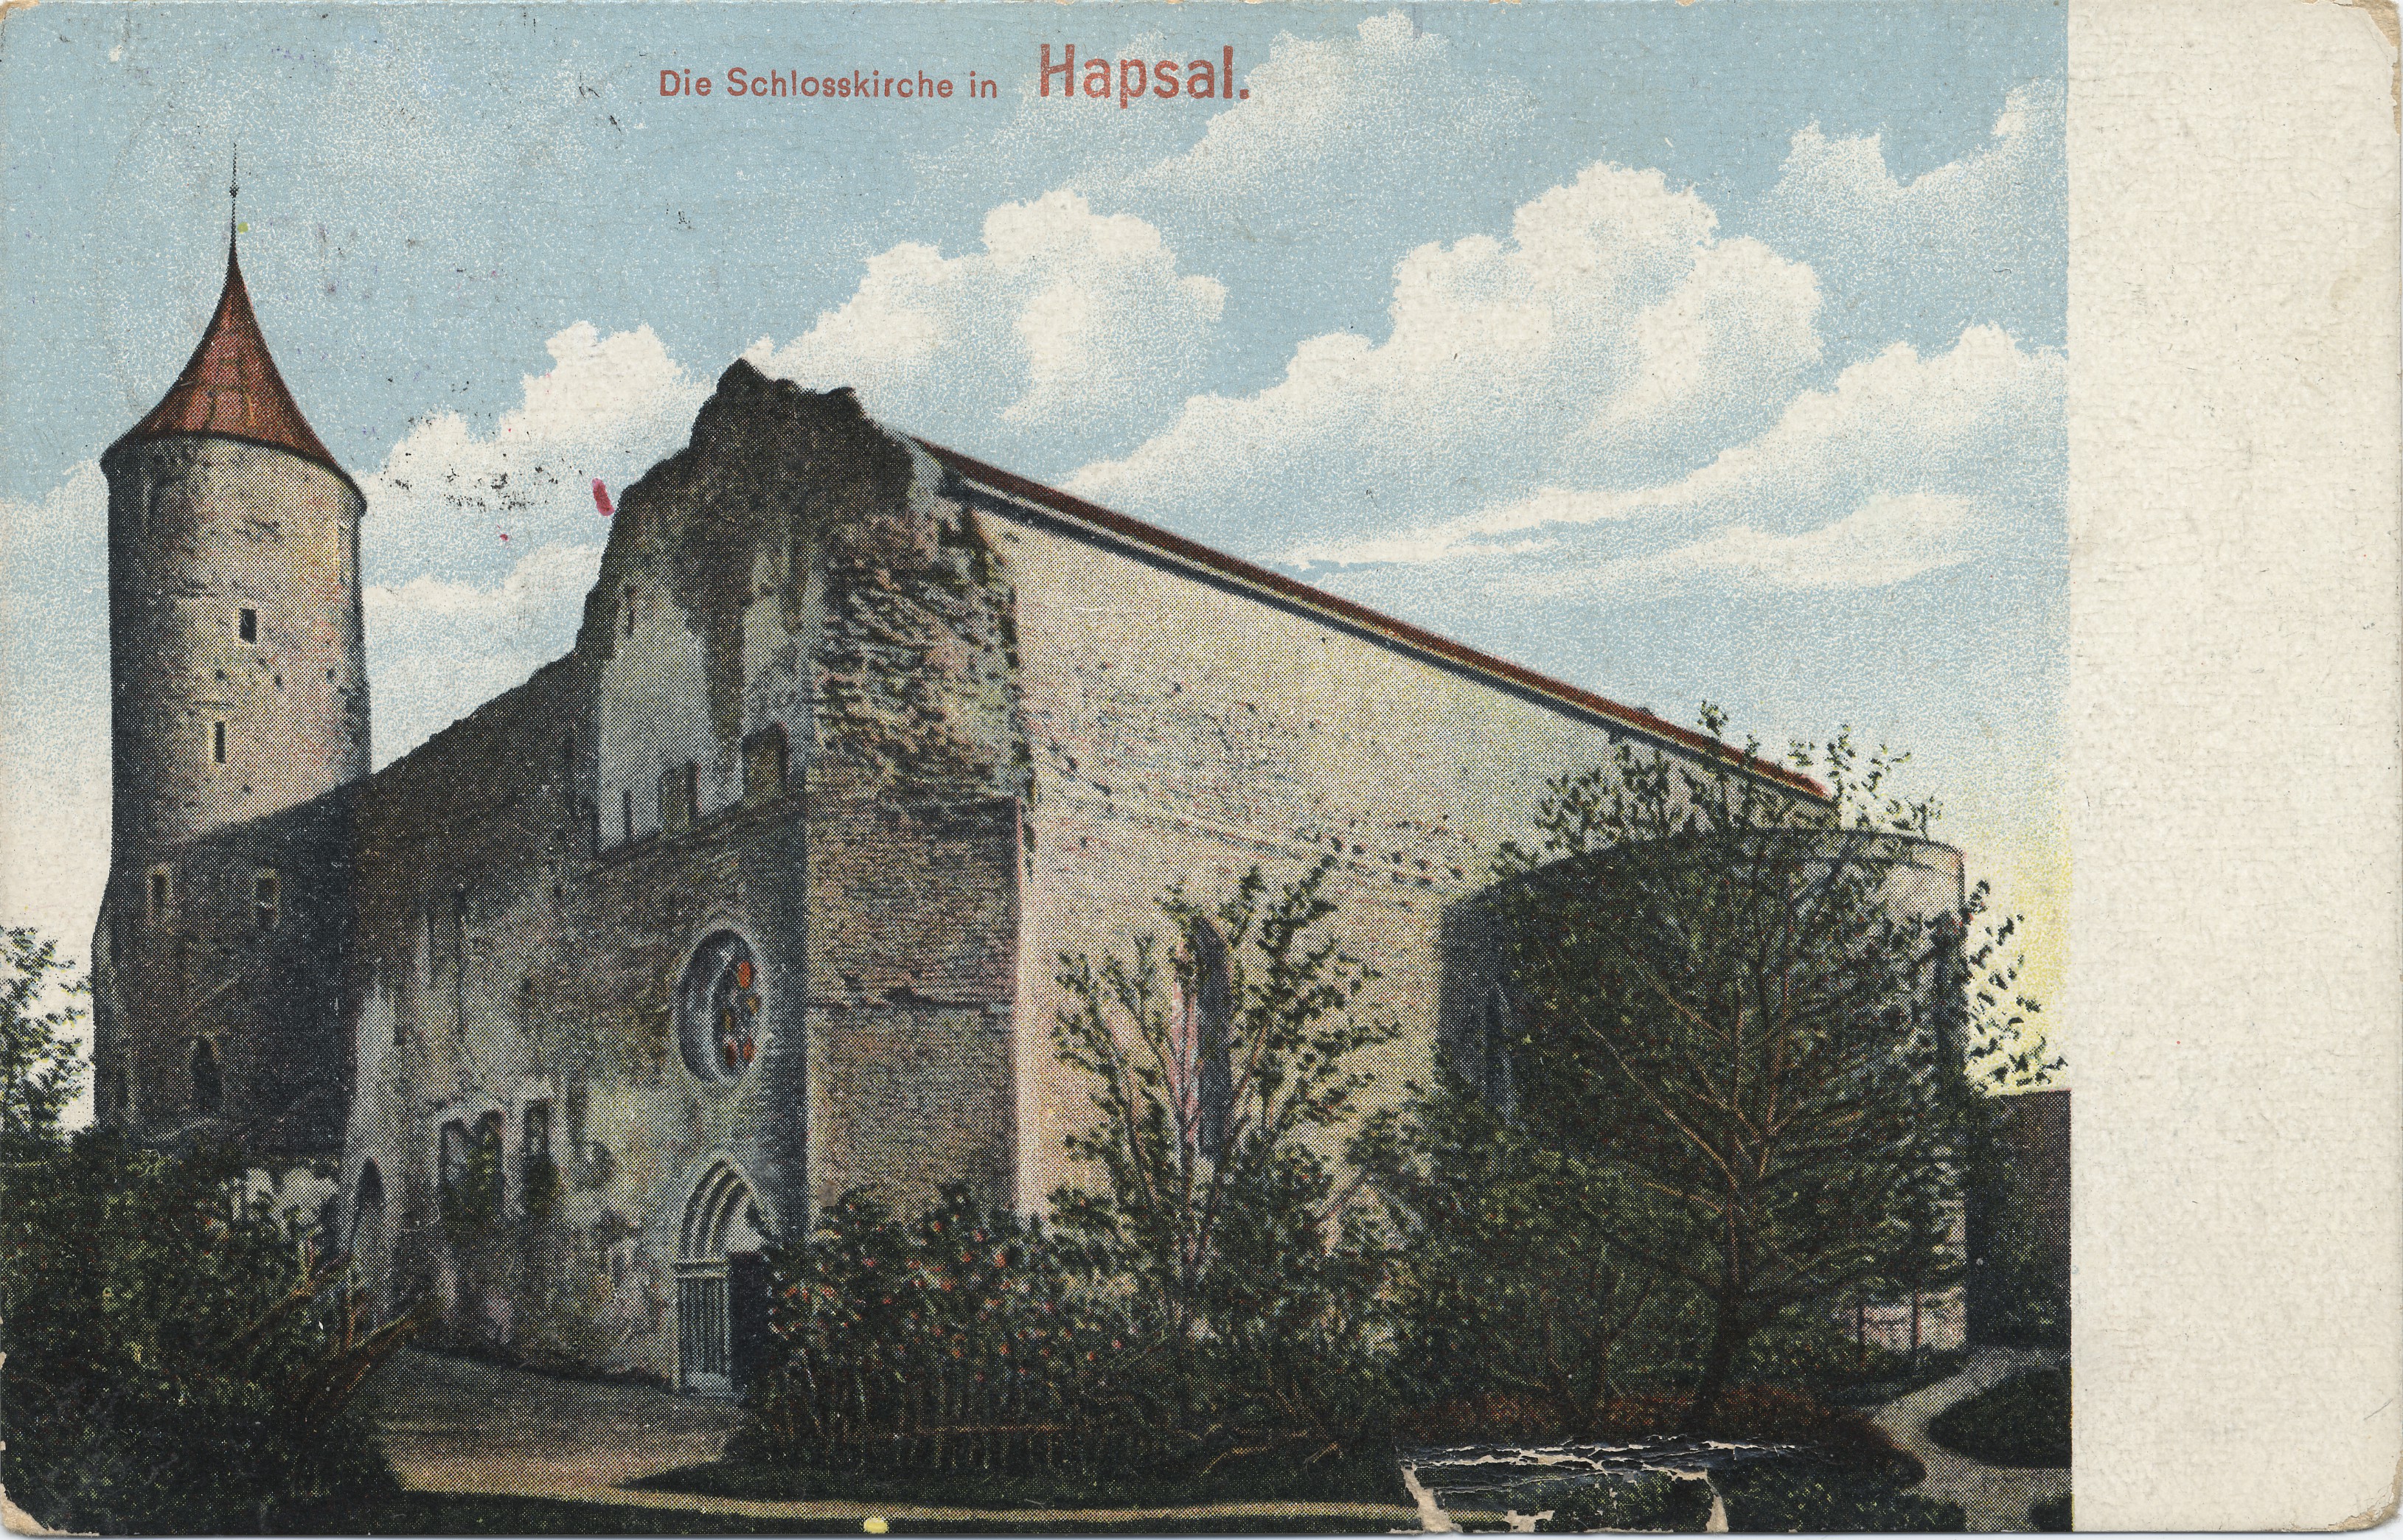 The Castle Church in Hapsal